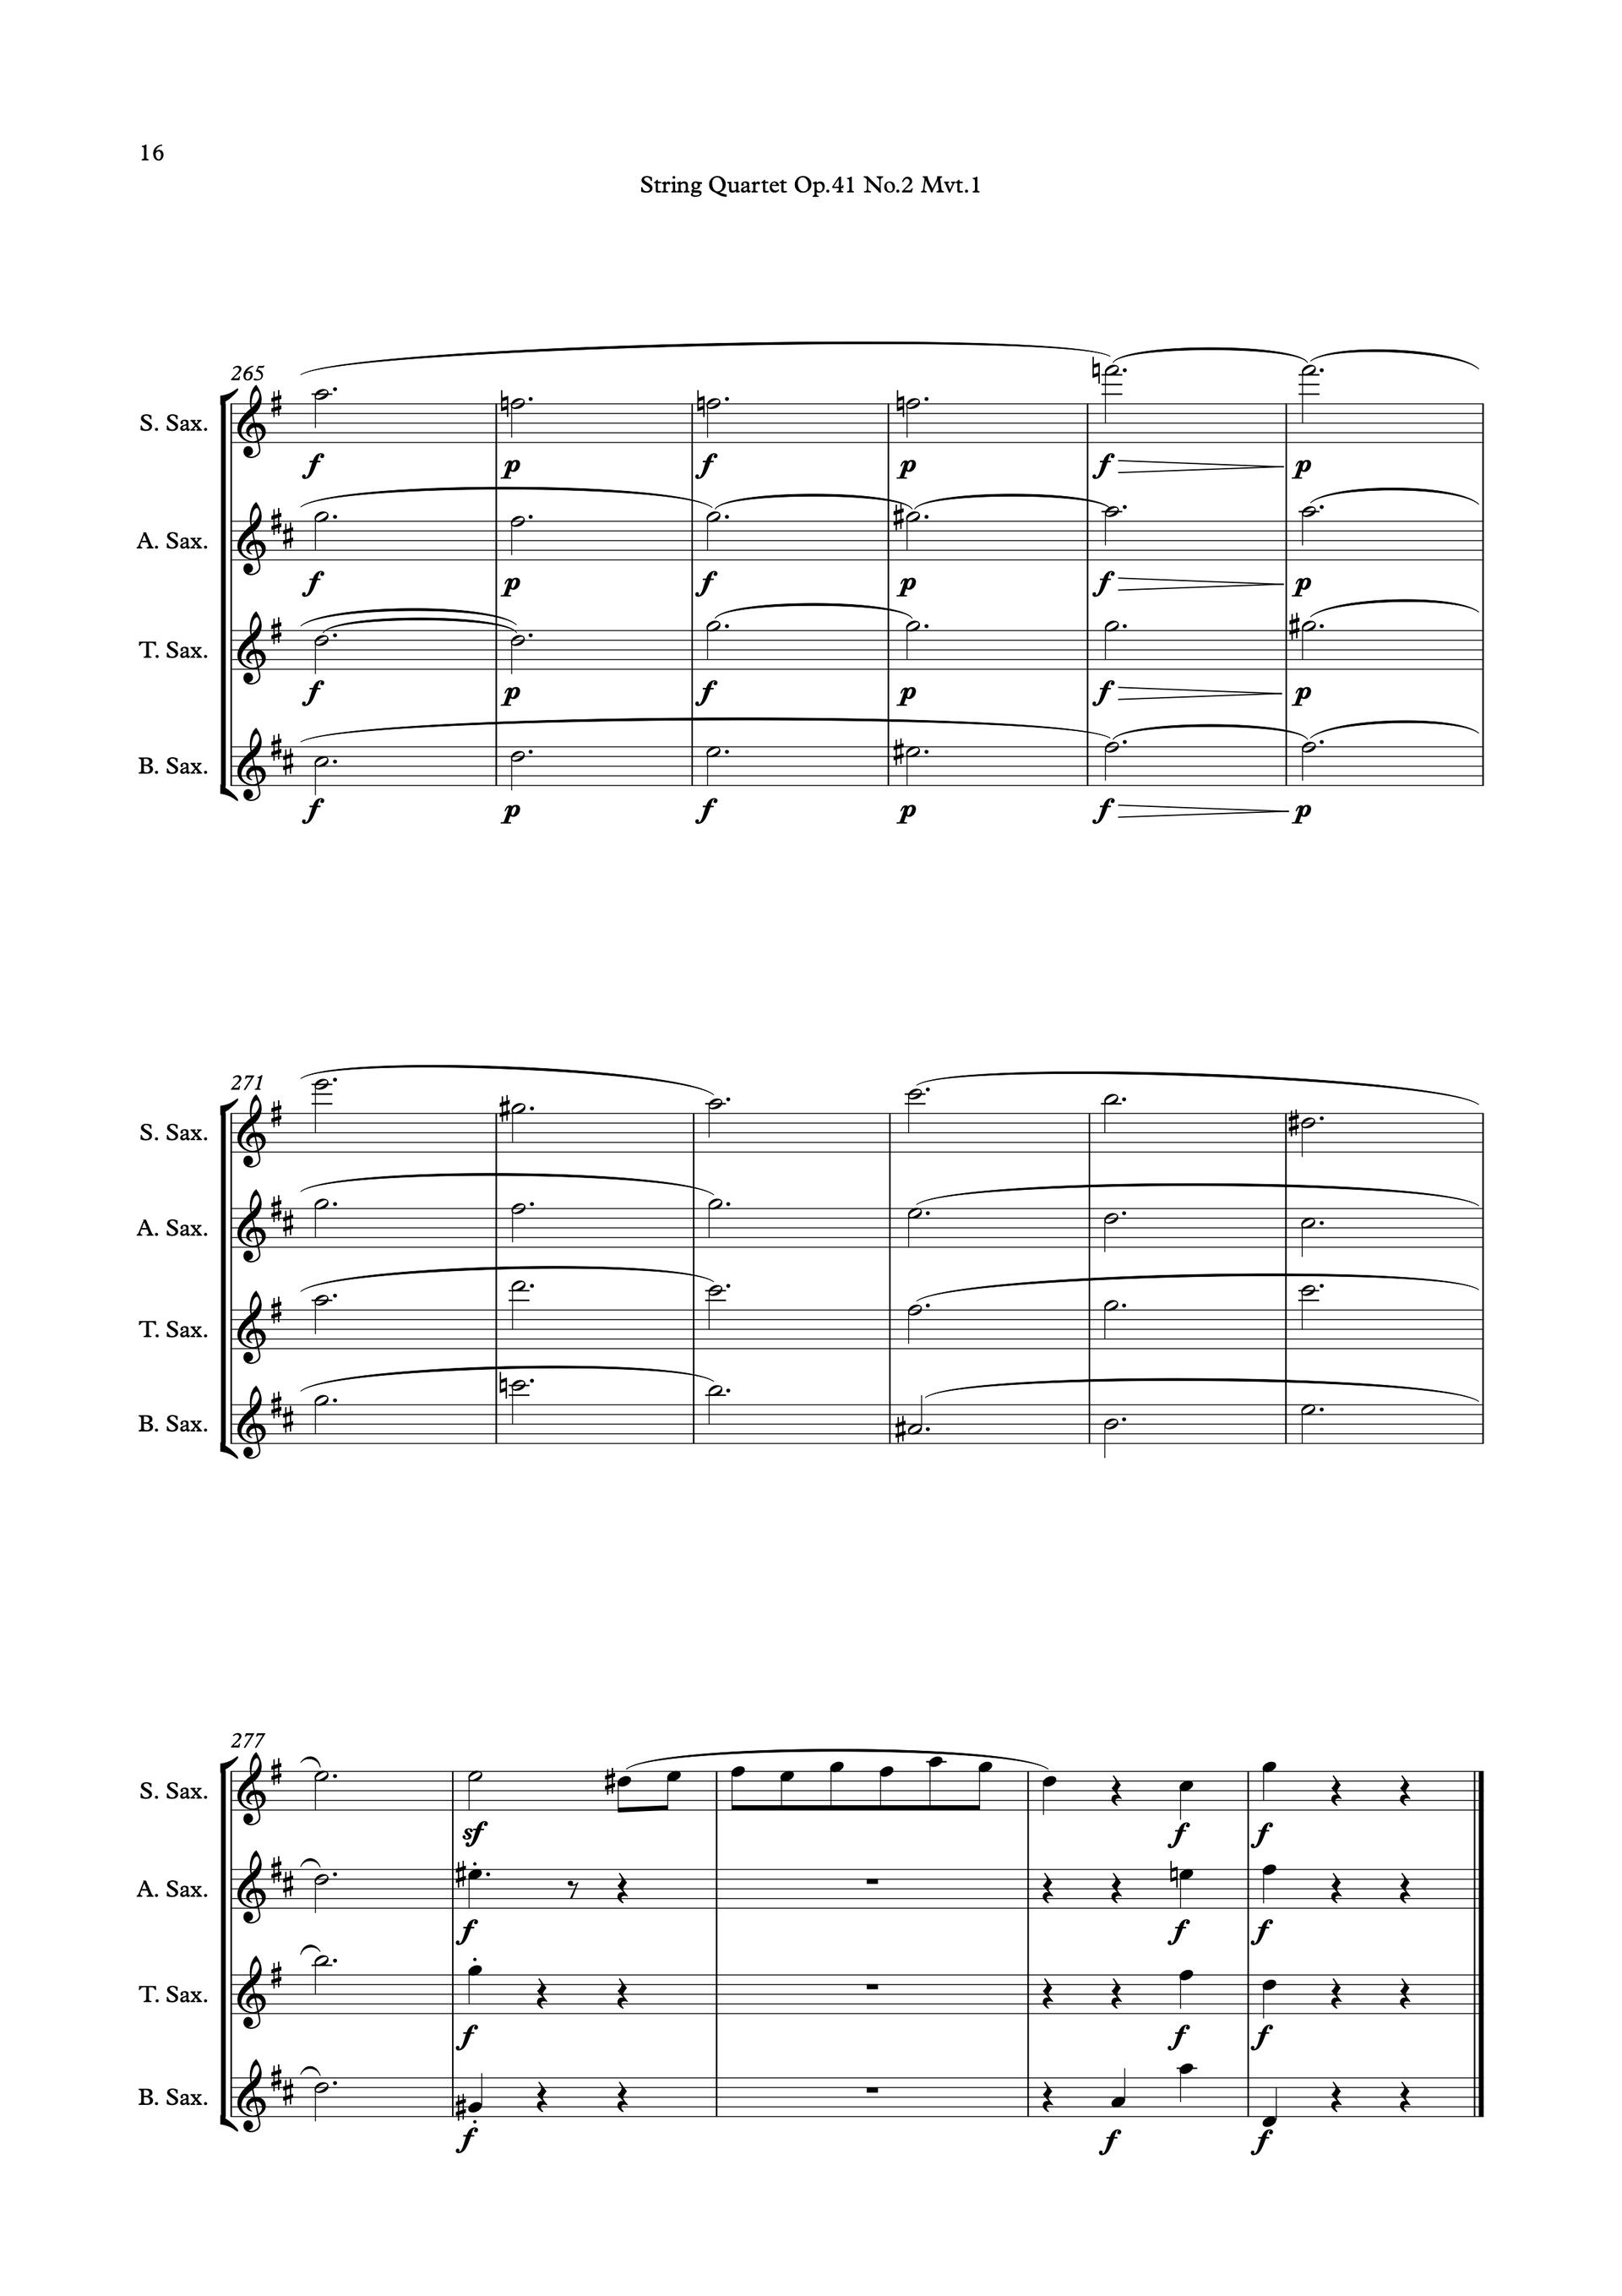 Sheet music of Schumann String Quartet No. 2, Op. 41, 1st Movement arranged for saxophone quartet preview page 16